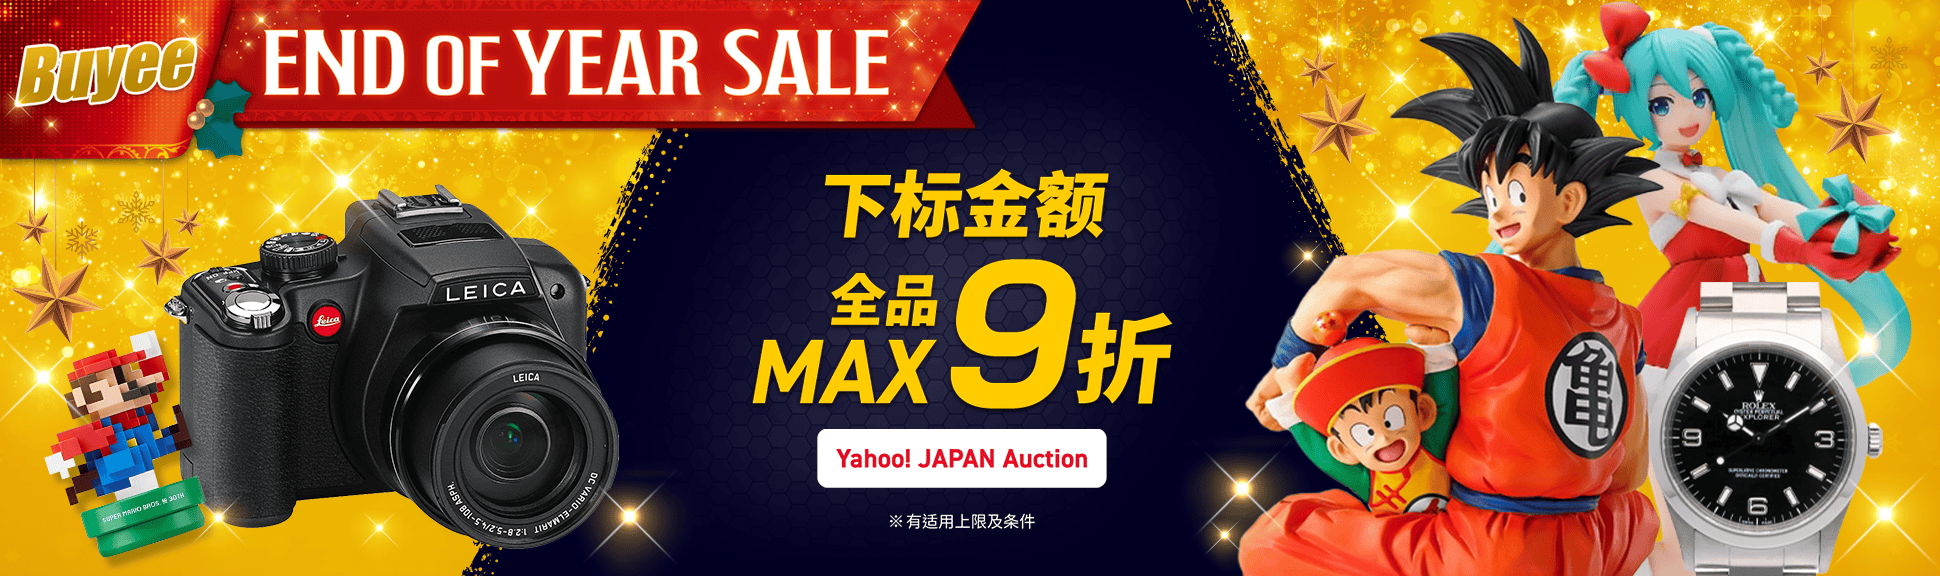 Buyee End of Year Sale!商品金额MAX9折 期间限定超值优惠券惊喜发放中！